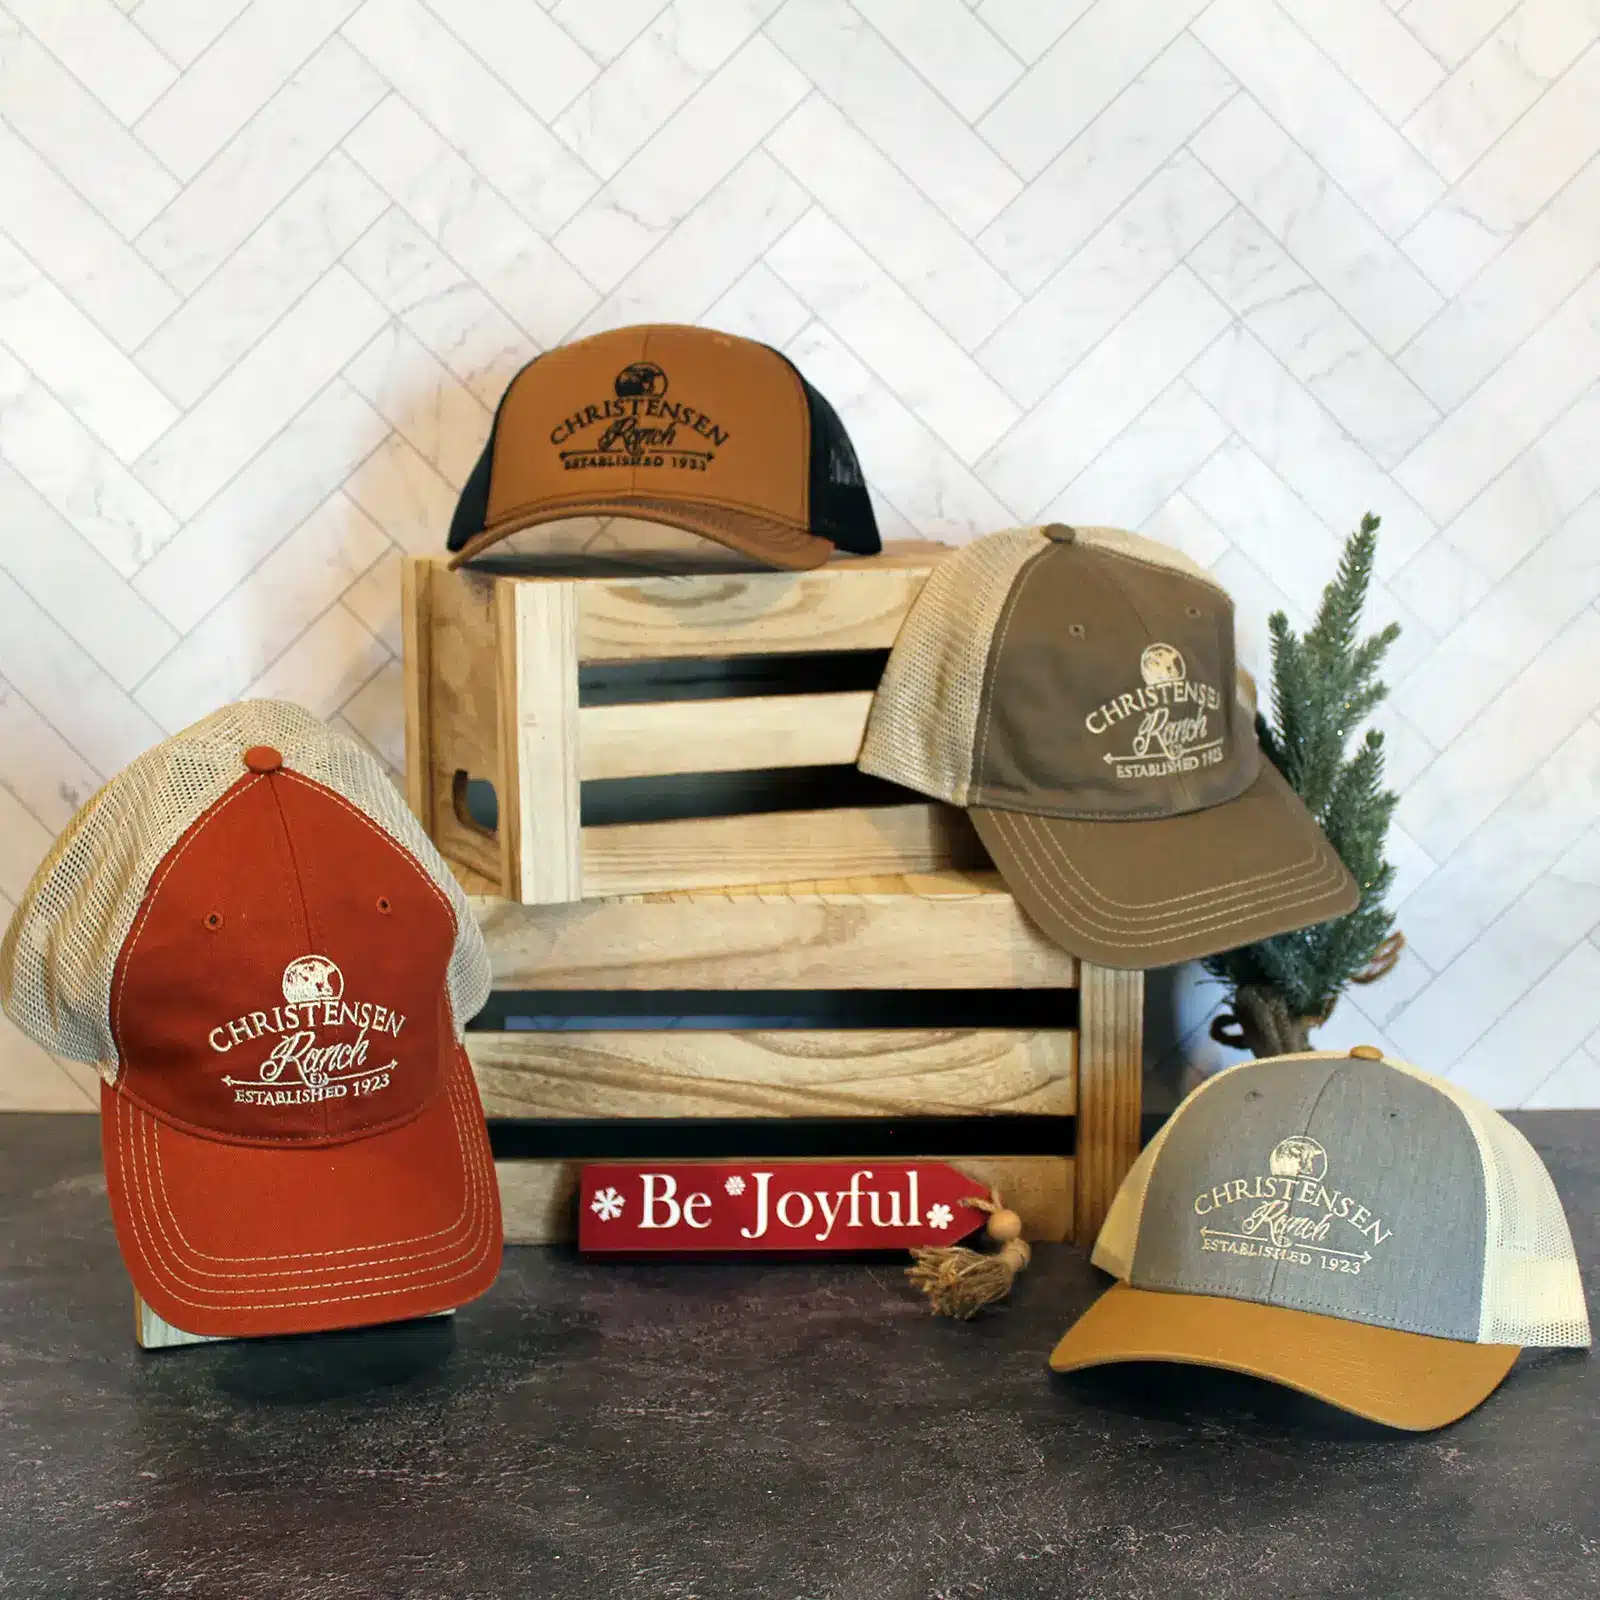 Custom Trucker Hat For Ranch Farm